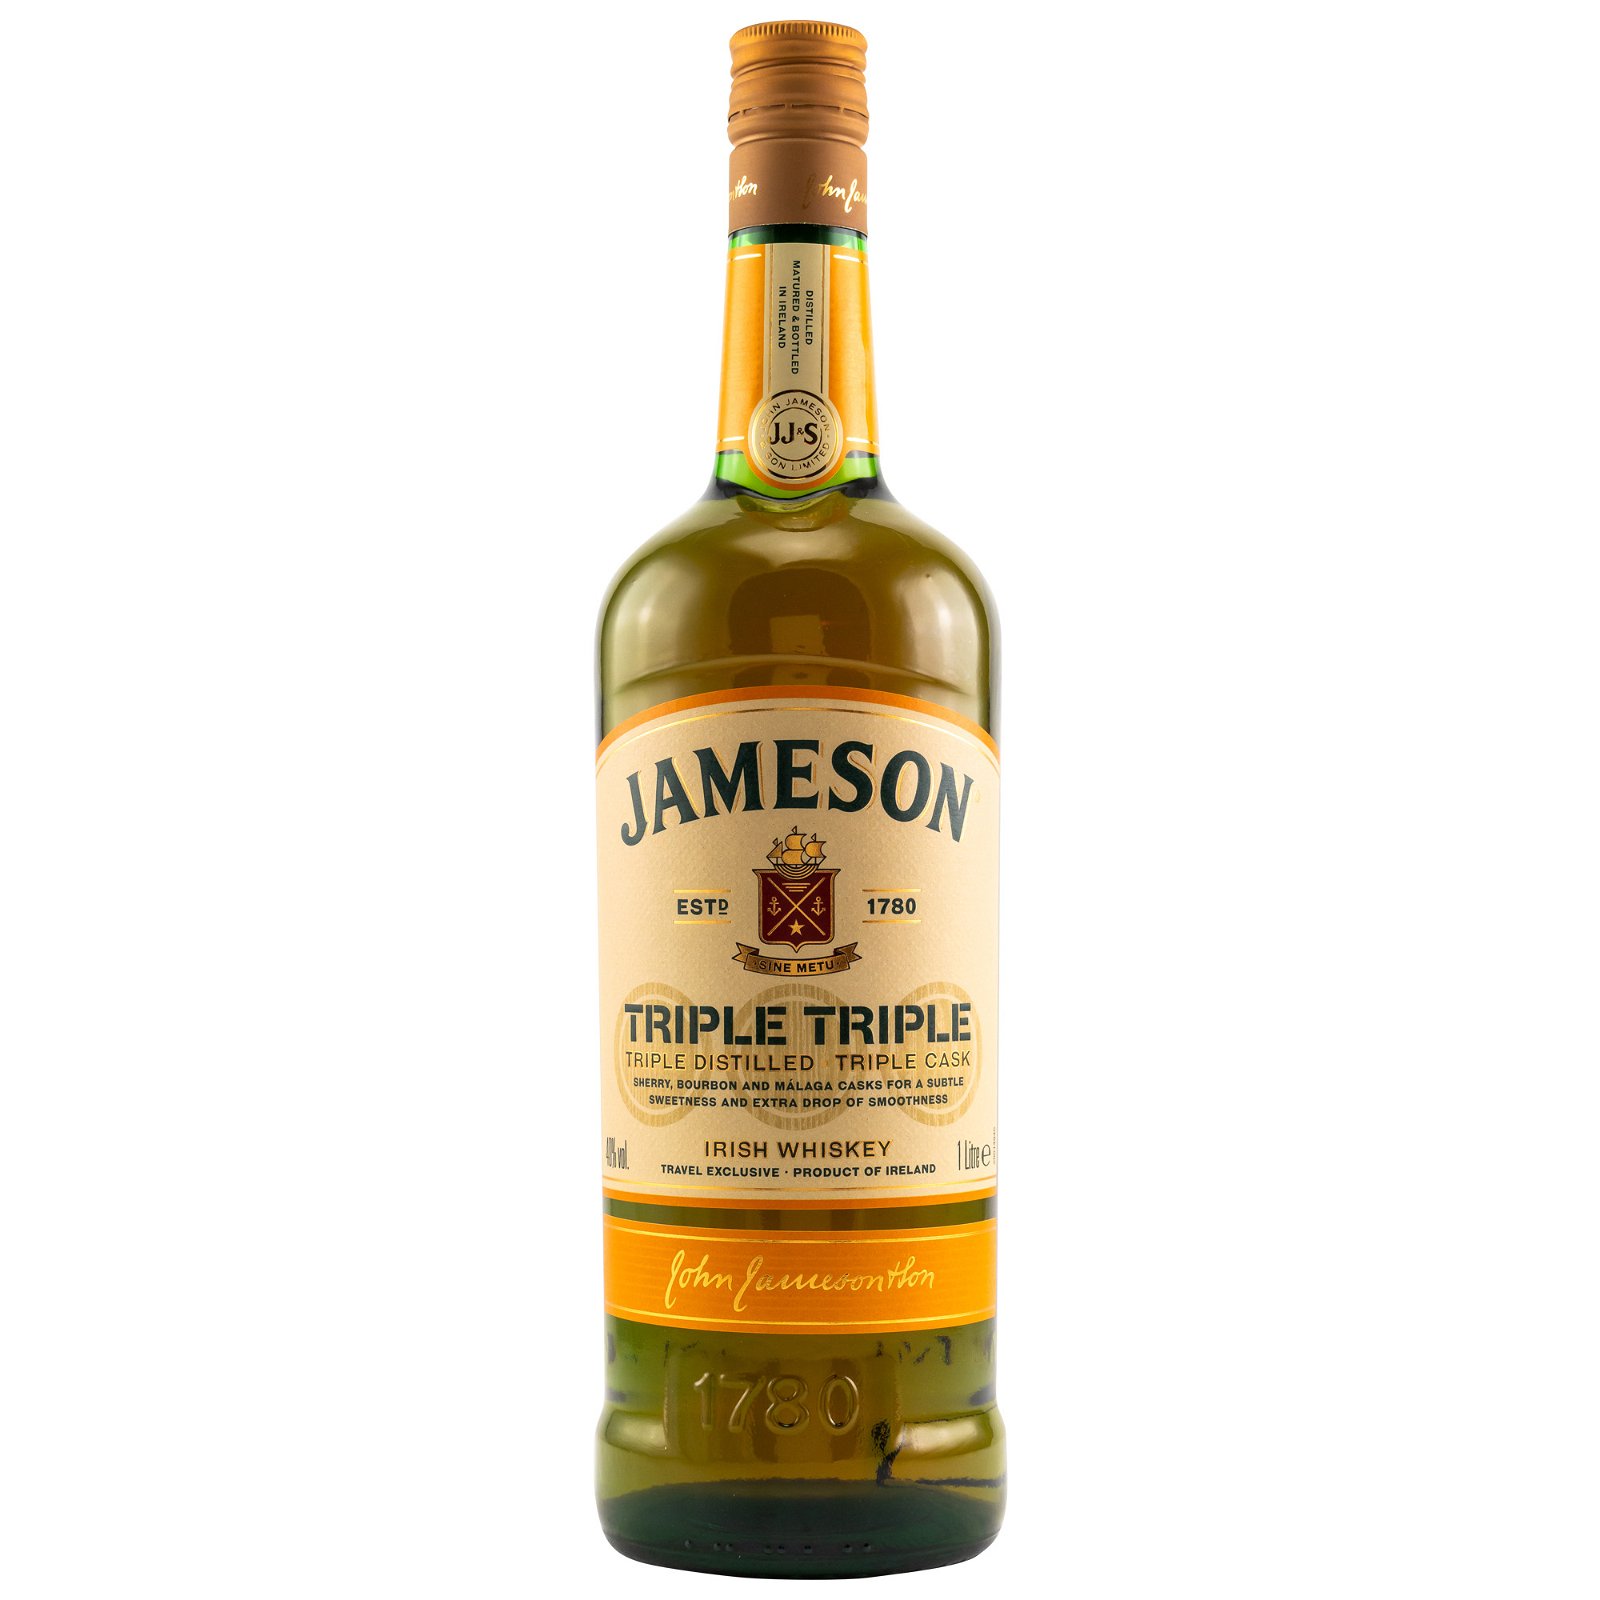 Jameson Triple Triple